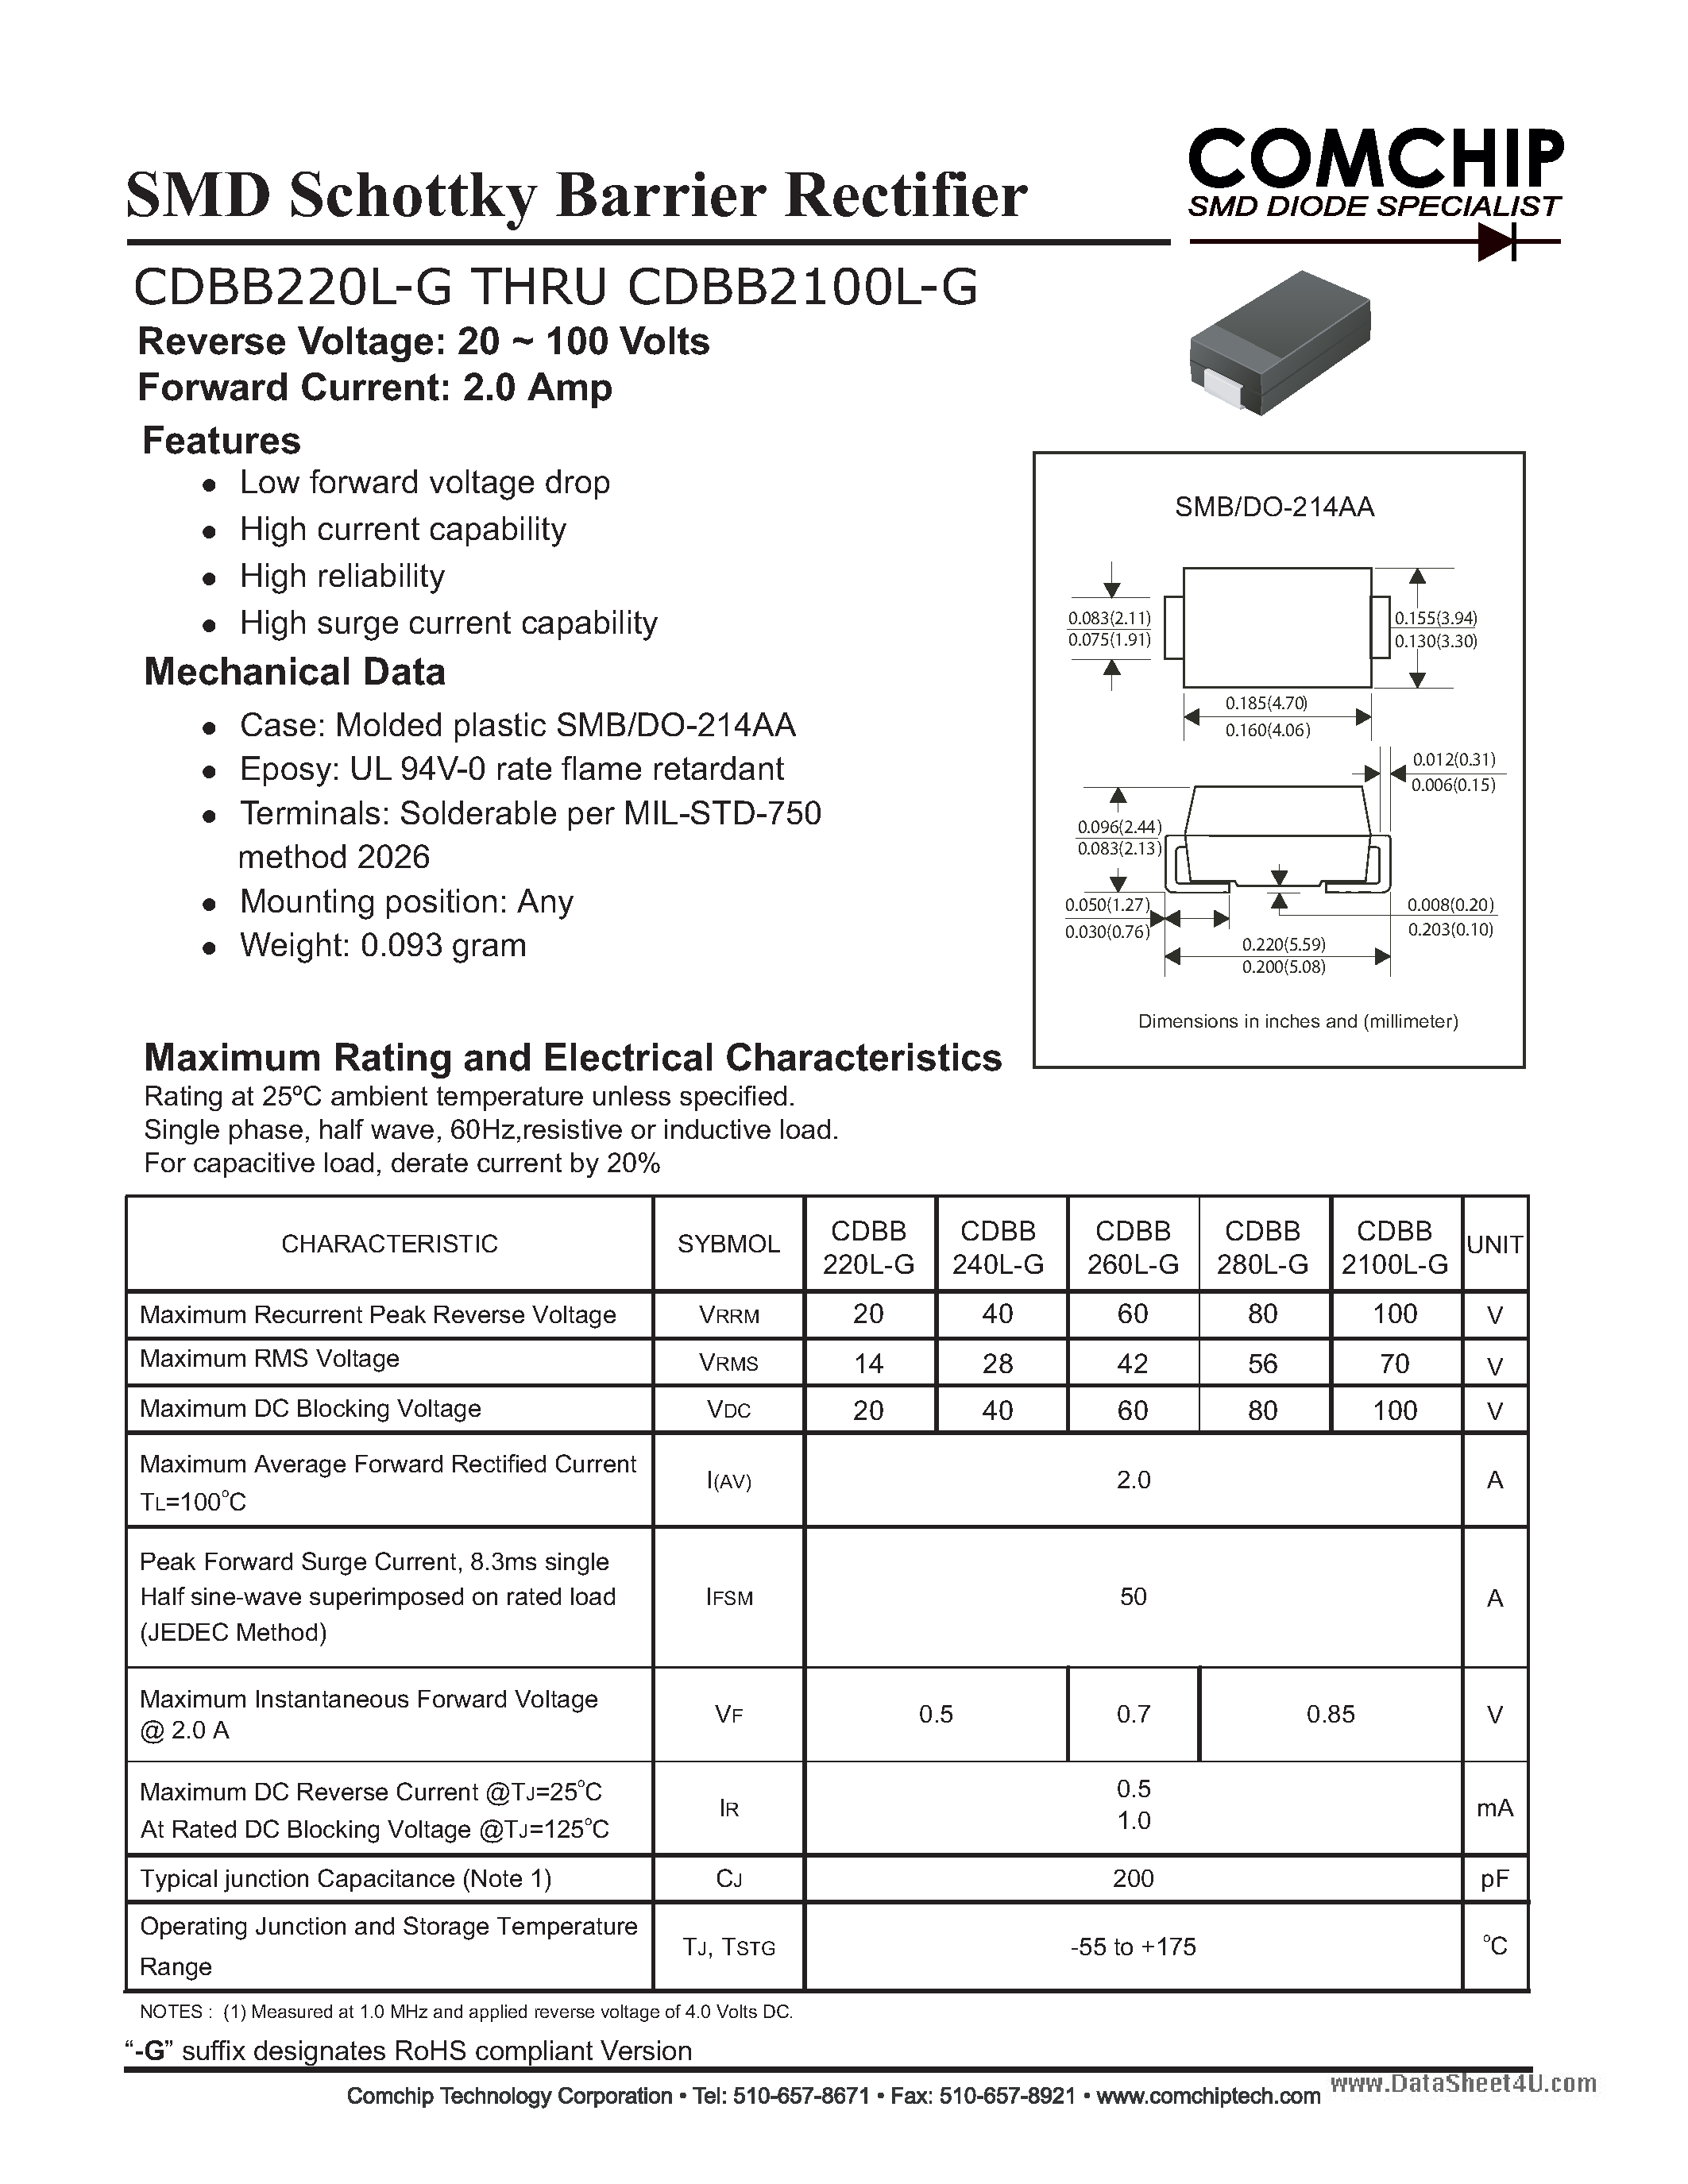 Datasheet CDBB2100L-G - (CDBB220L-G - CDBB2100L-G) SMD Schottky Barrier Rectifier page 1